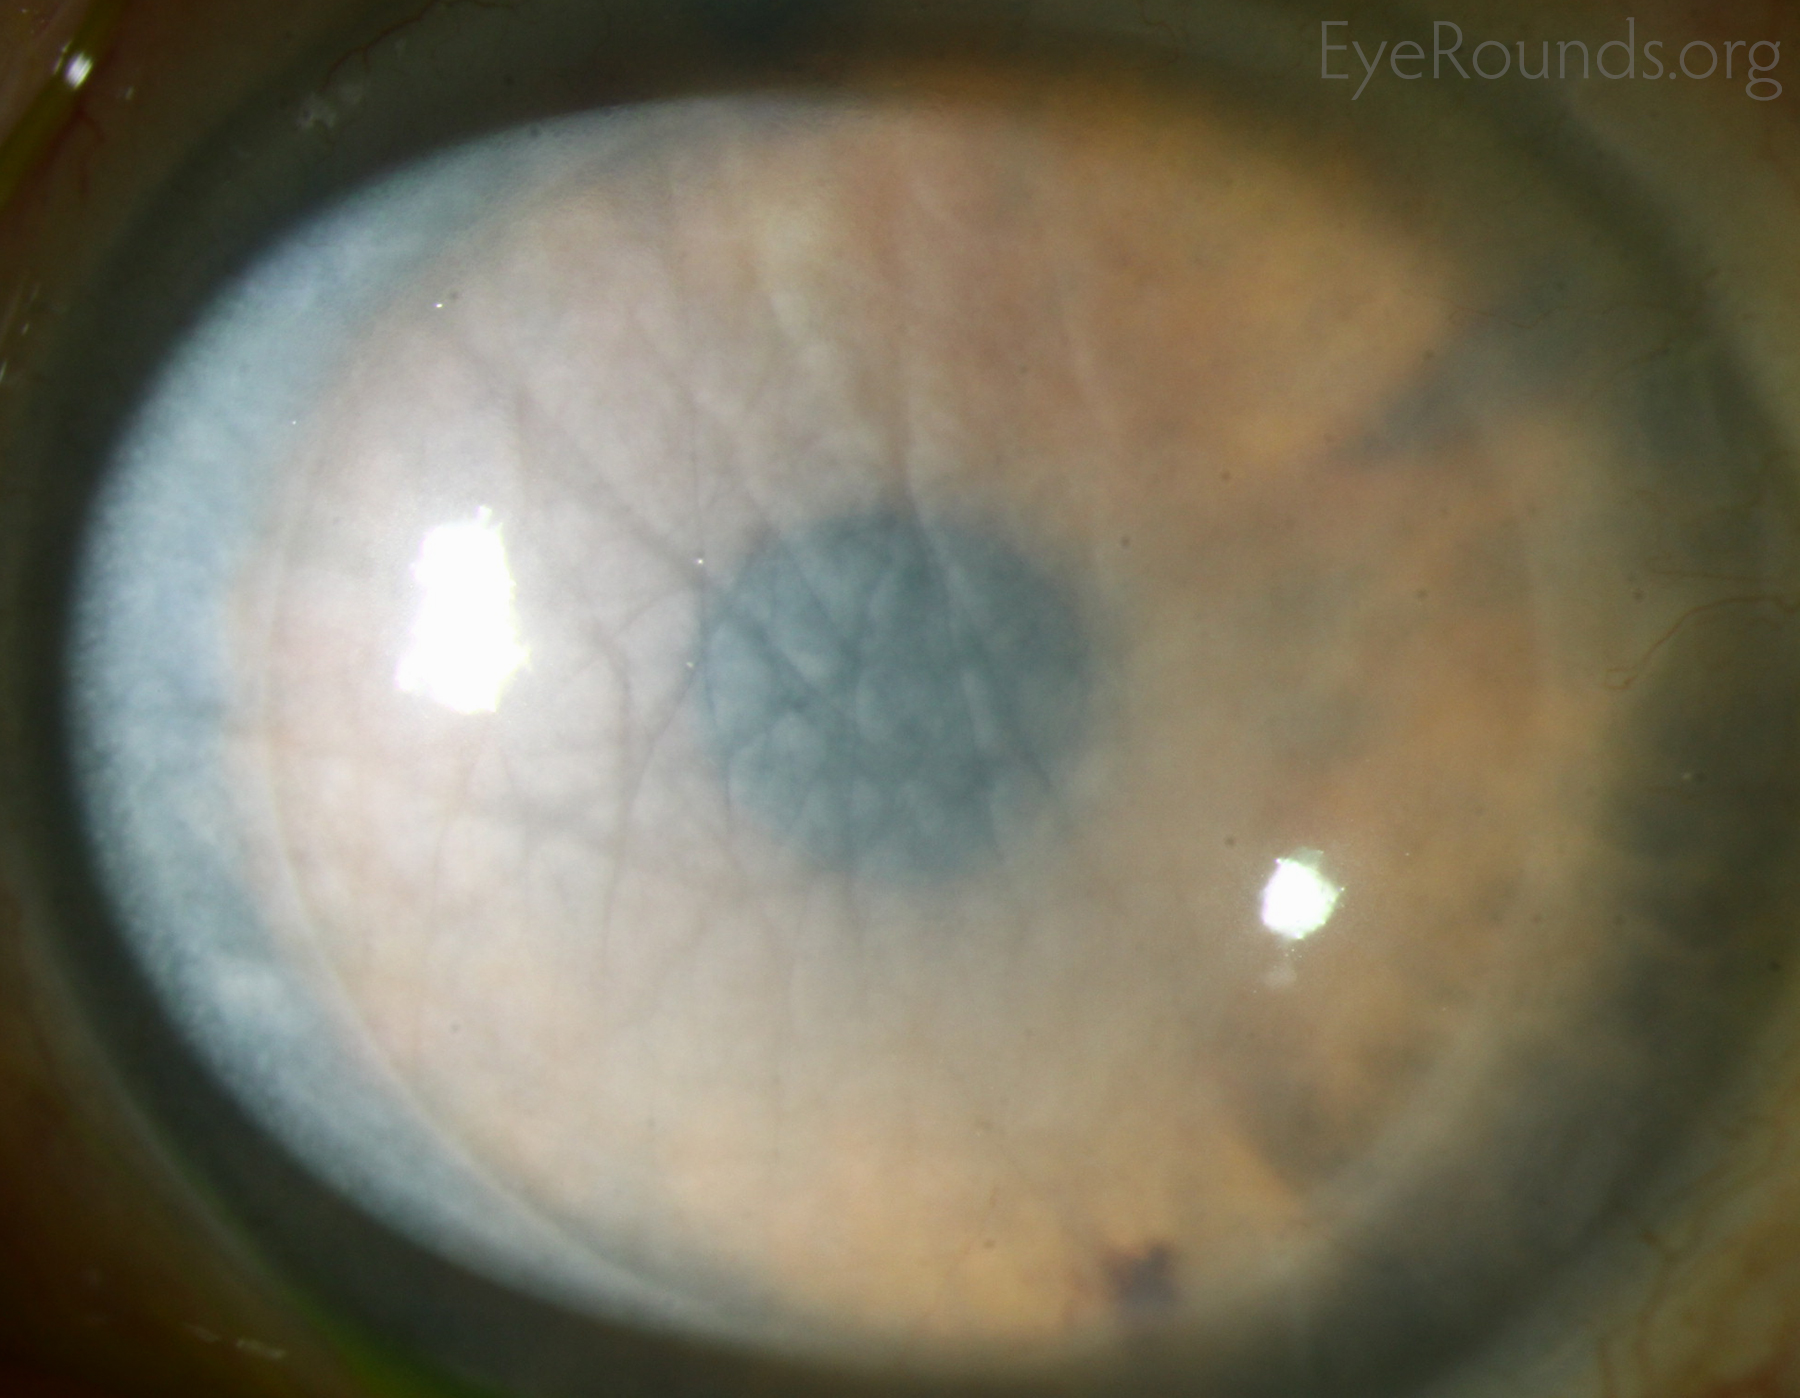 Massive corneal edema secondary to DSAEK allograft rejection.